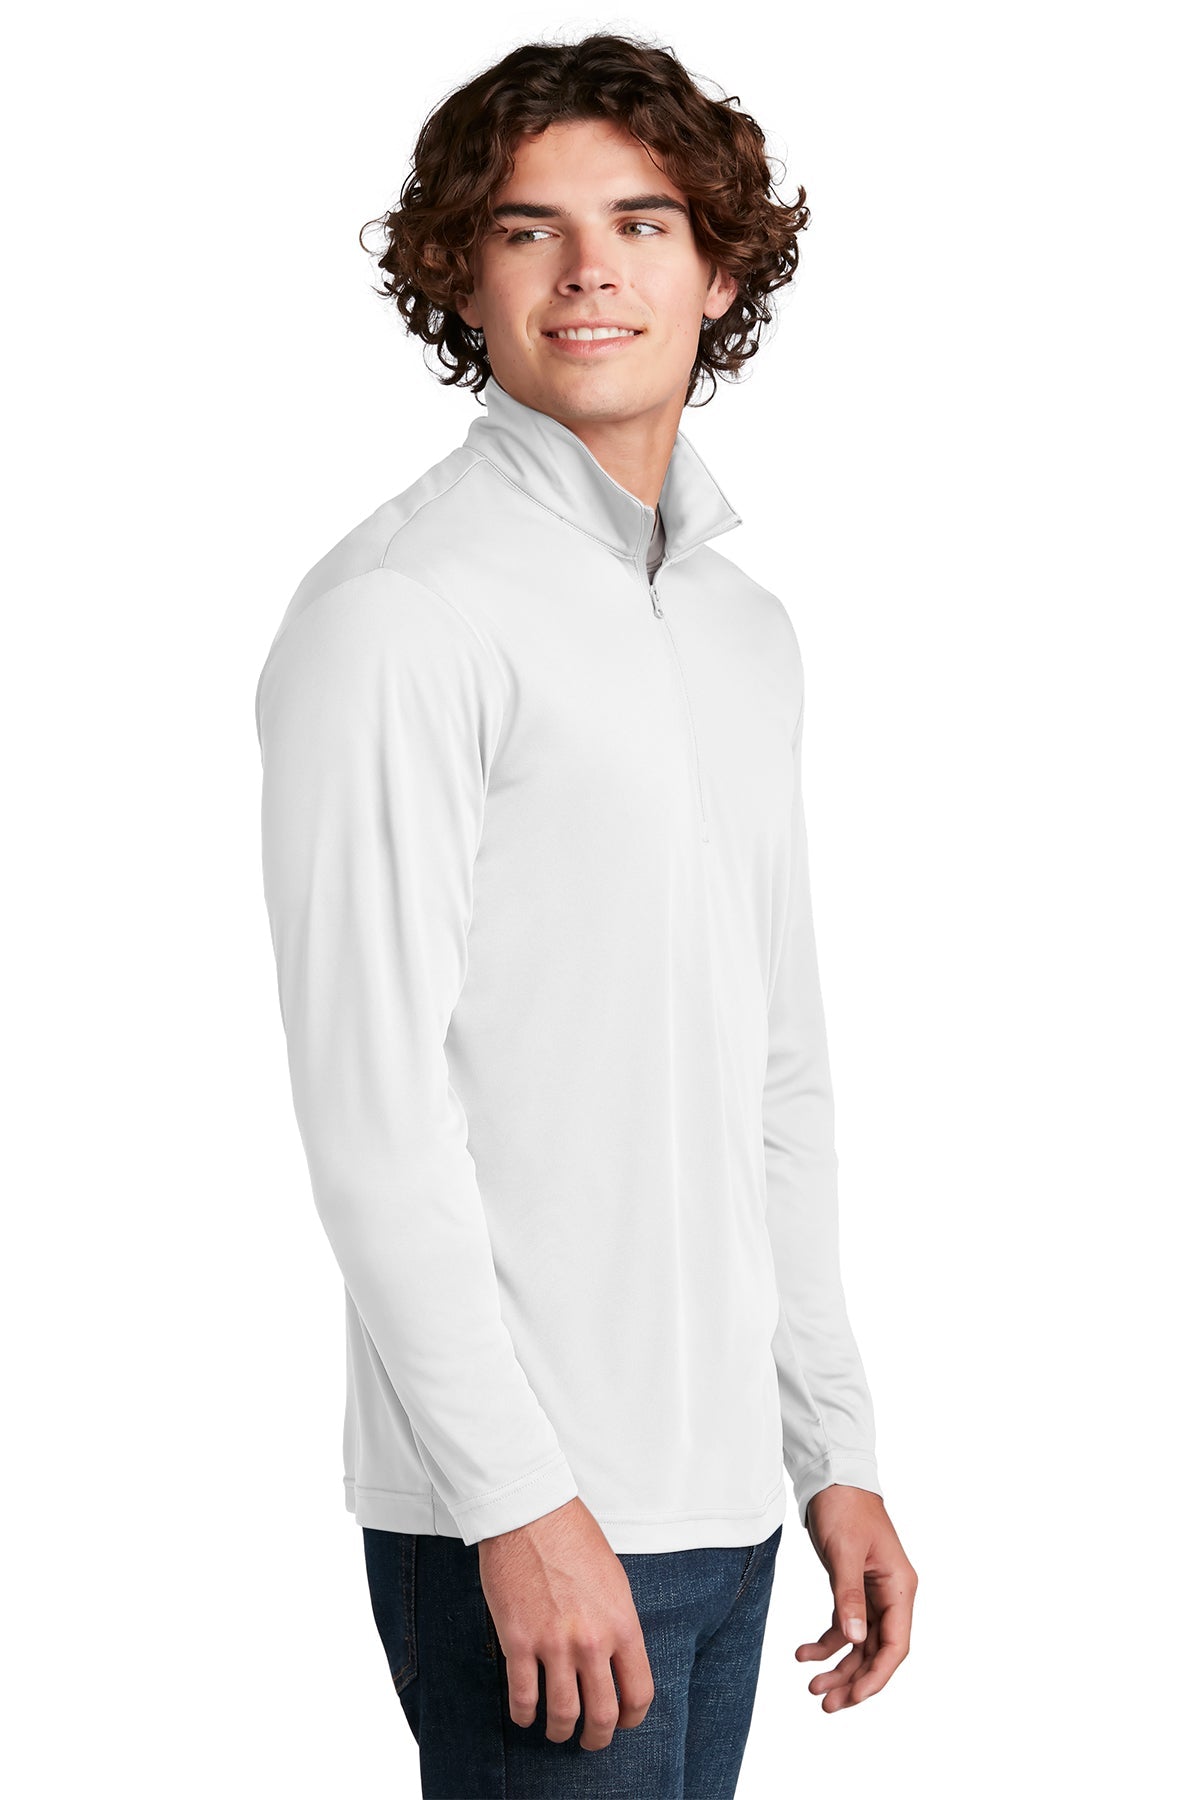 sport-tek_st357 _white_company_logo_sweatshirts